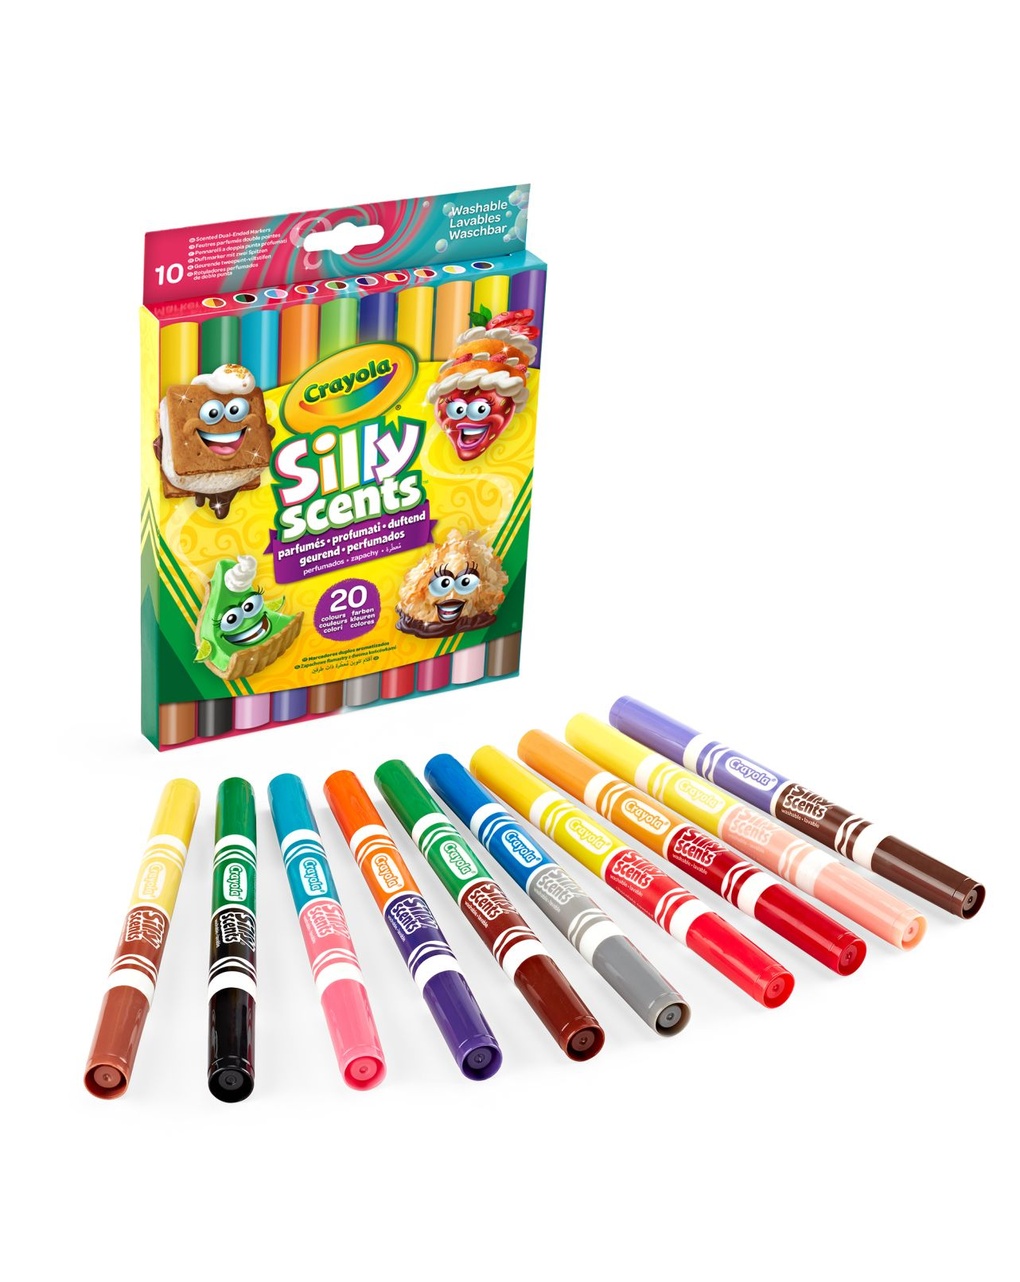 Silly scents - 10 pennarelli lavabili doppia punta profumati - 3+ - crayola